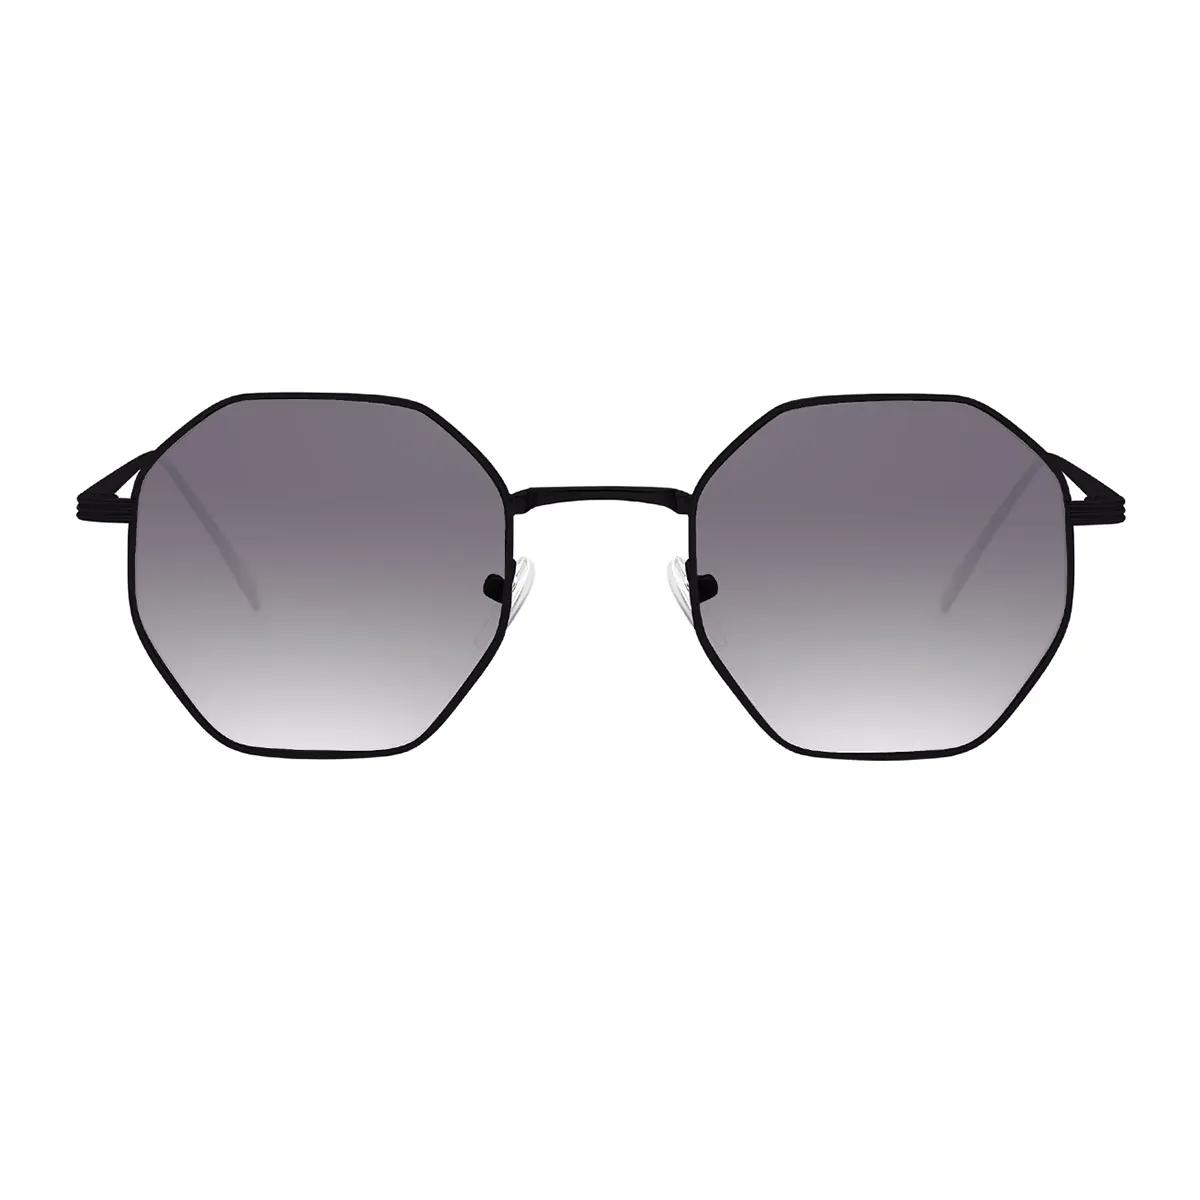 Shepard - Geometric Black Sunglasses for Women - EFE